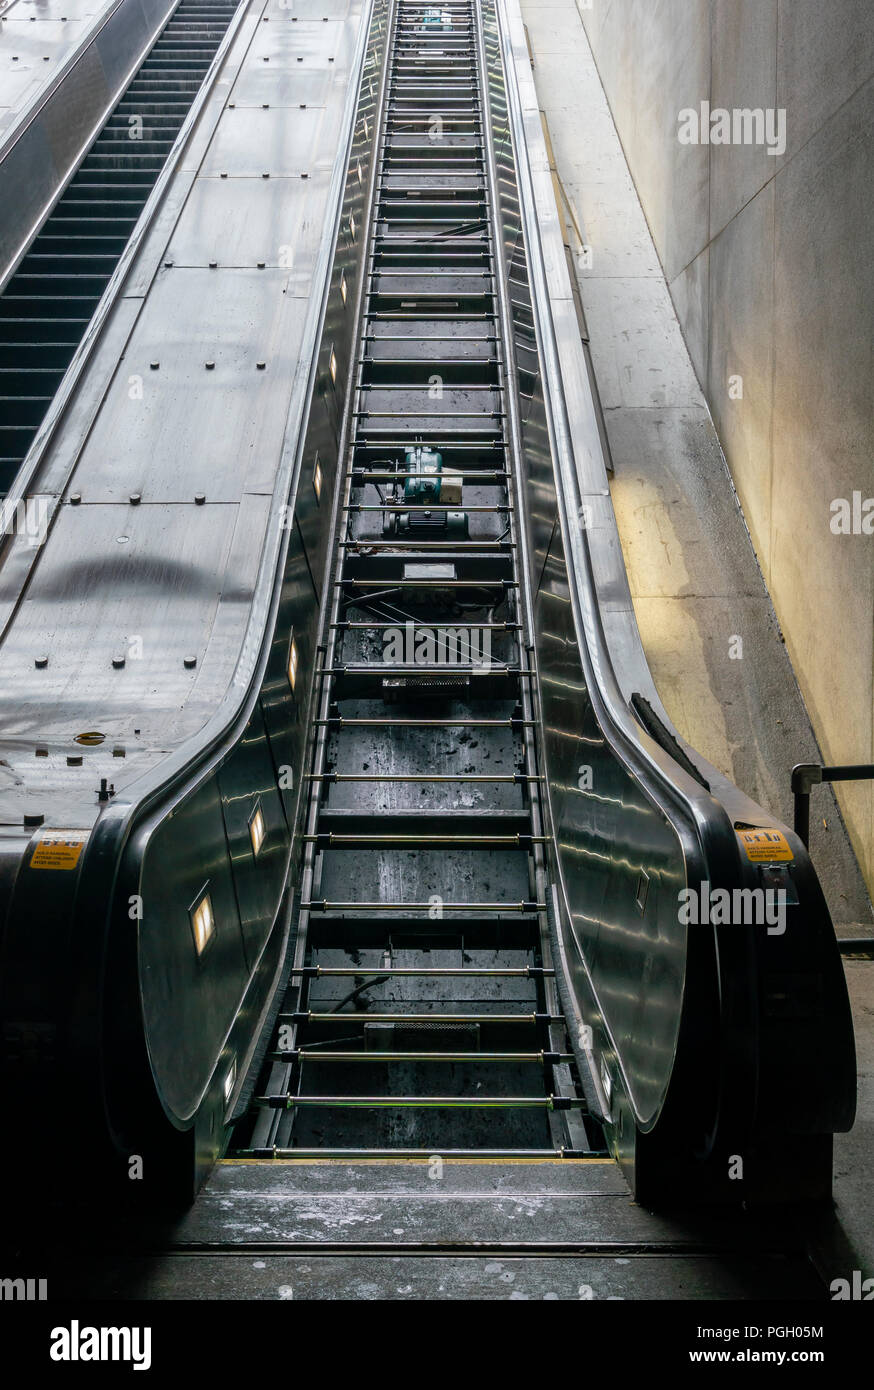 Escalator in a train station under repair Stock Photo